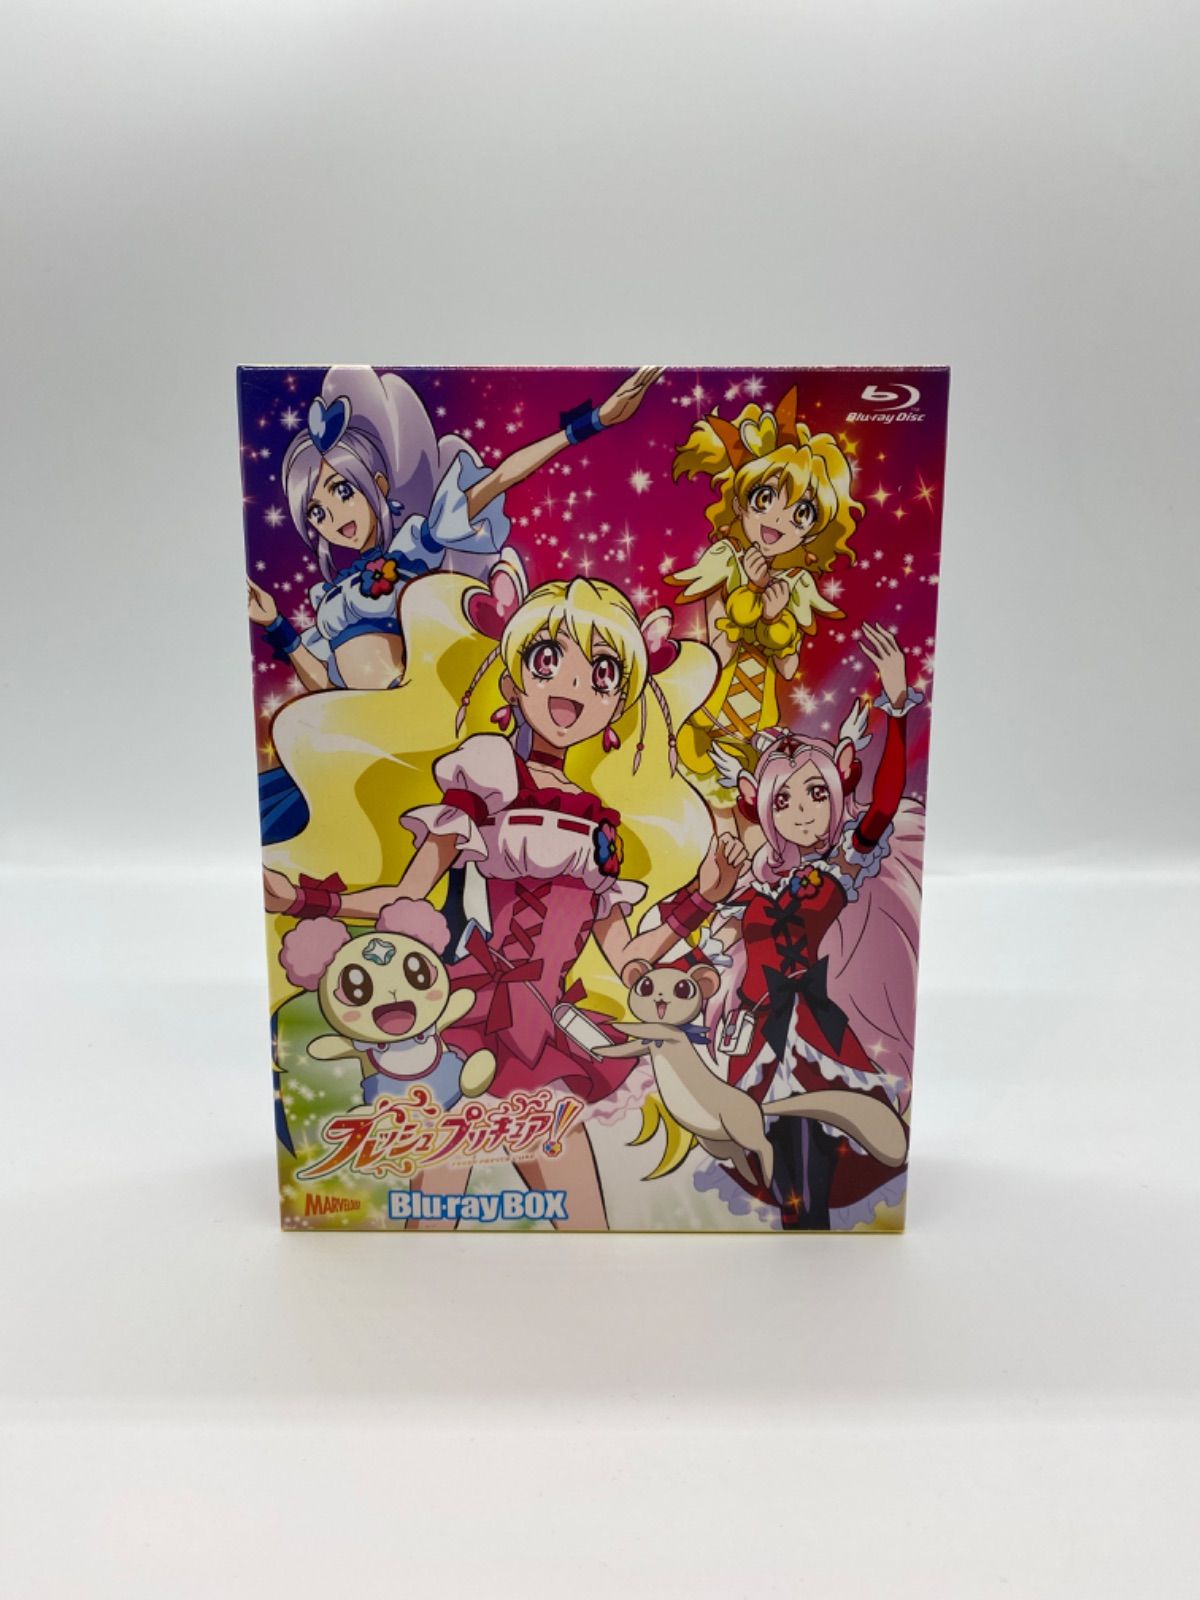 Blu-Ray]フレッシュプリキュア!Blu-rayBOX vol.1【完全初回生産限定